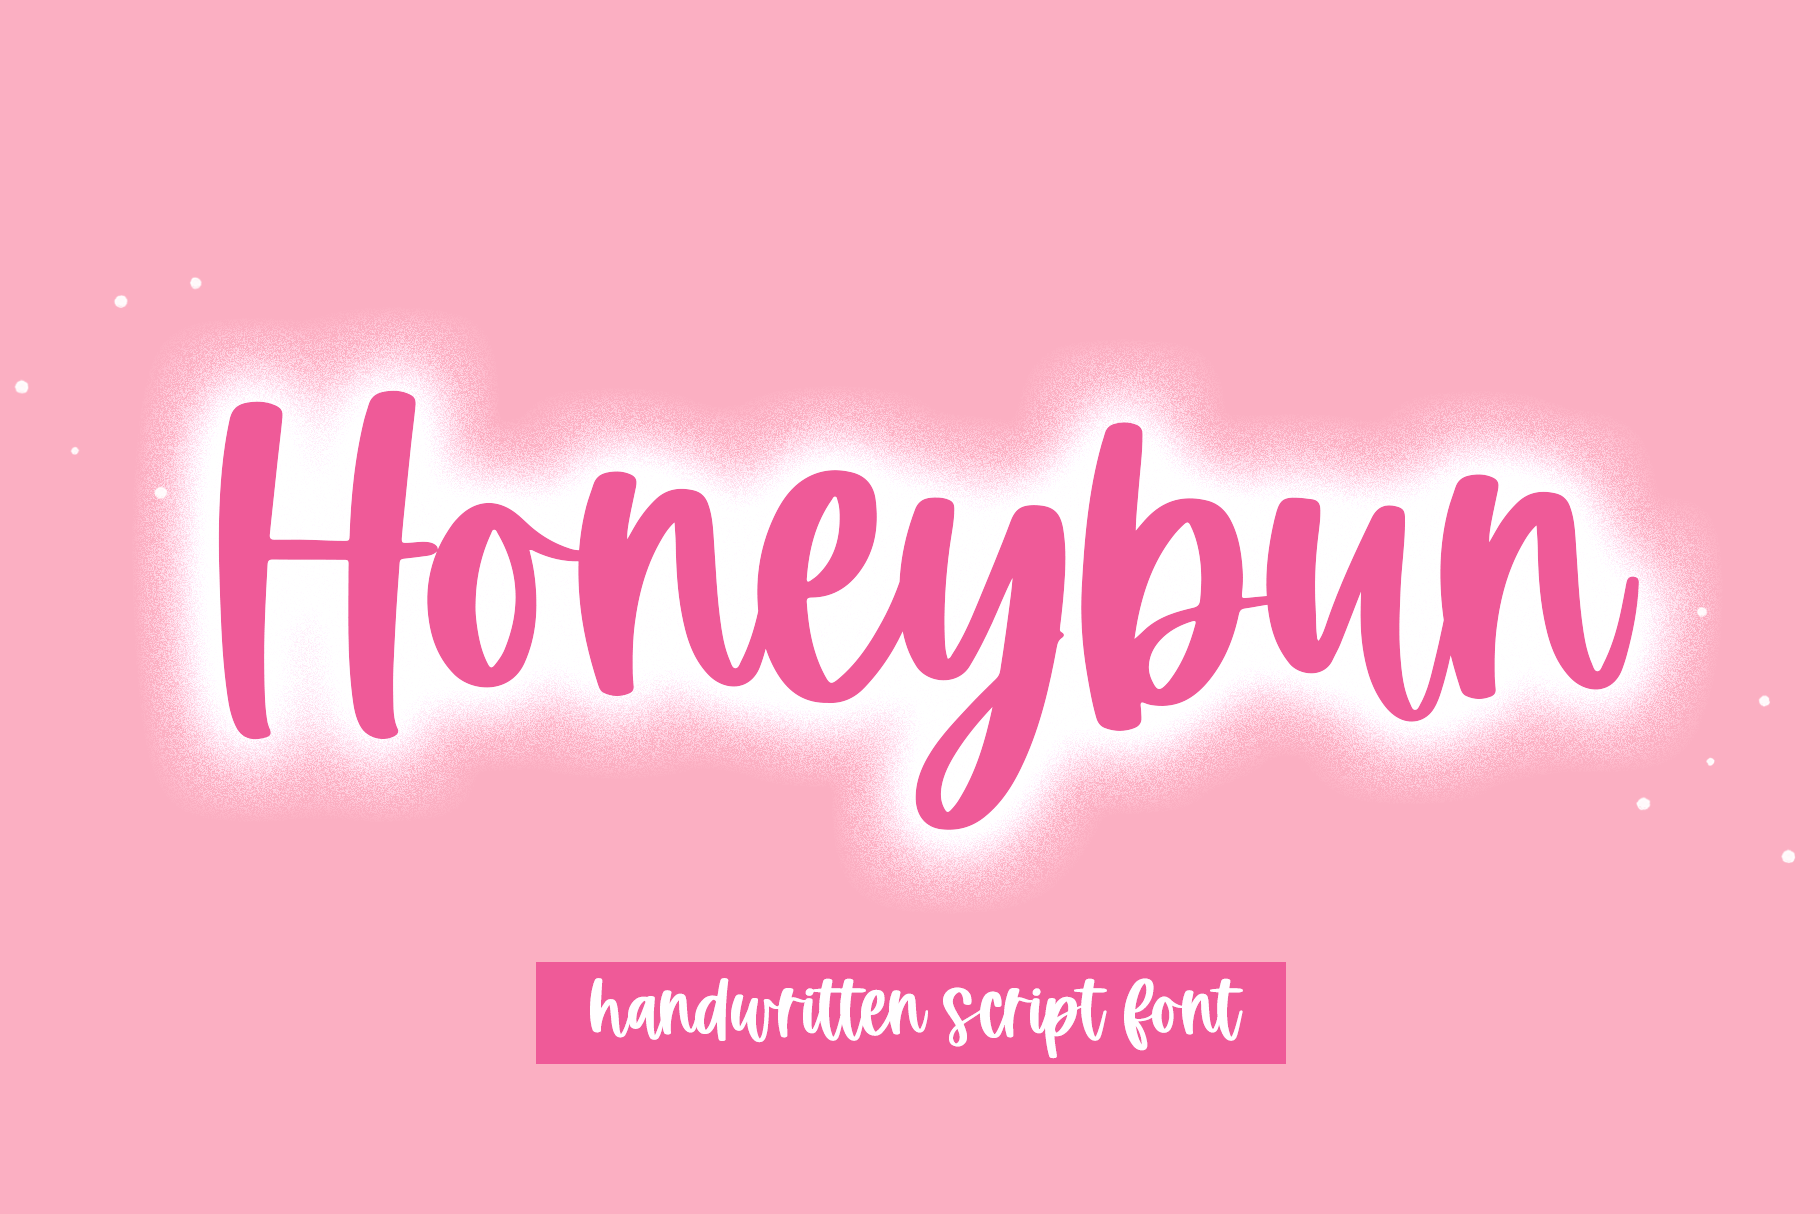 Honeybun Handwritten Script Font By Ka Designs Thehungryjpeg Com